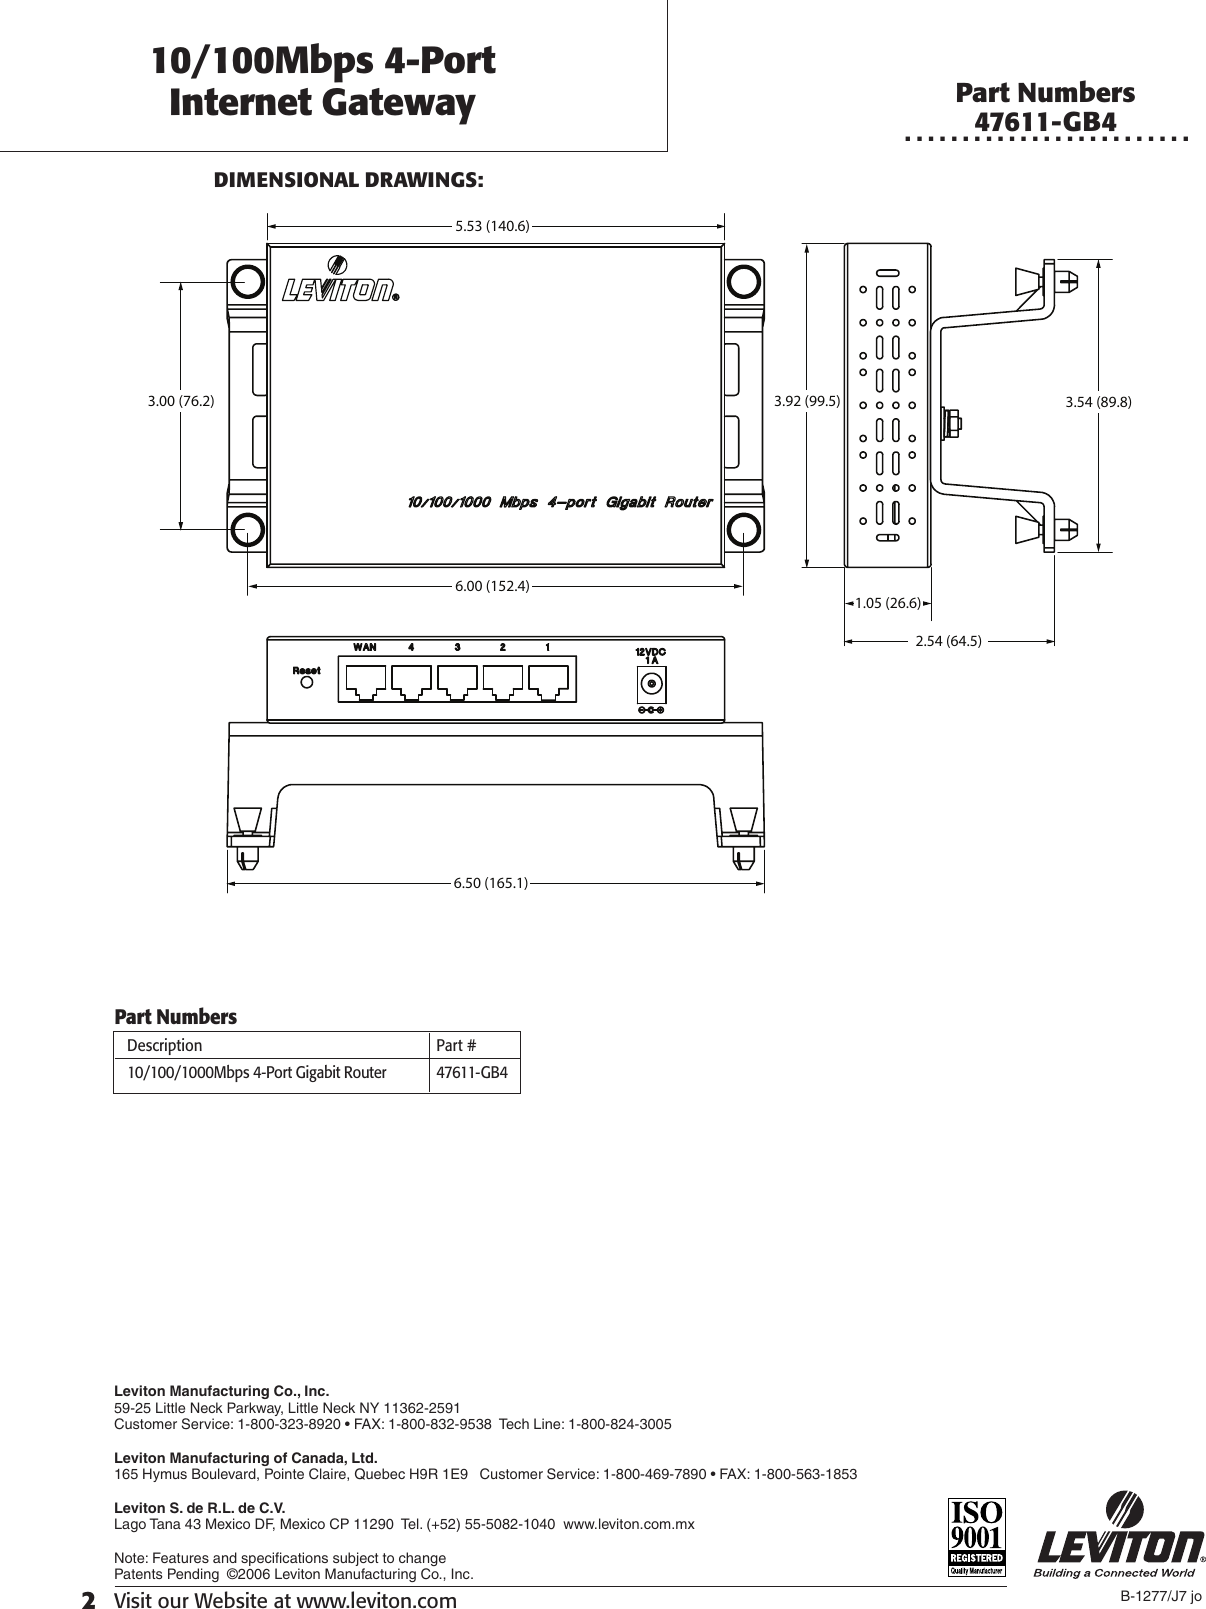 Page 2 of 2 - Leviton Leviton-4-Port-Gigabit-Router-Users-Manual- B-1277 Gigabit Router Spec Sht  Leviton-4-port-gigabit-router-users-manual